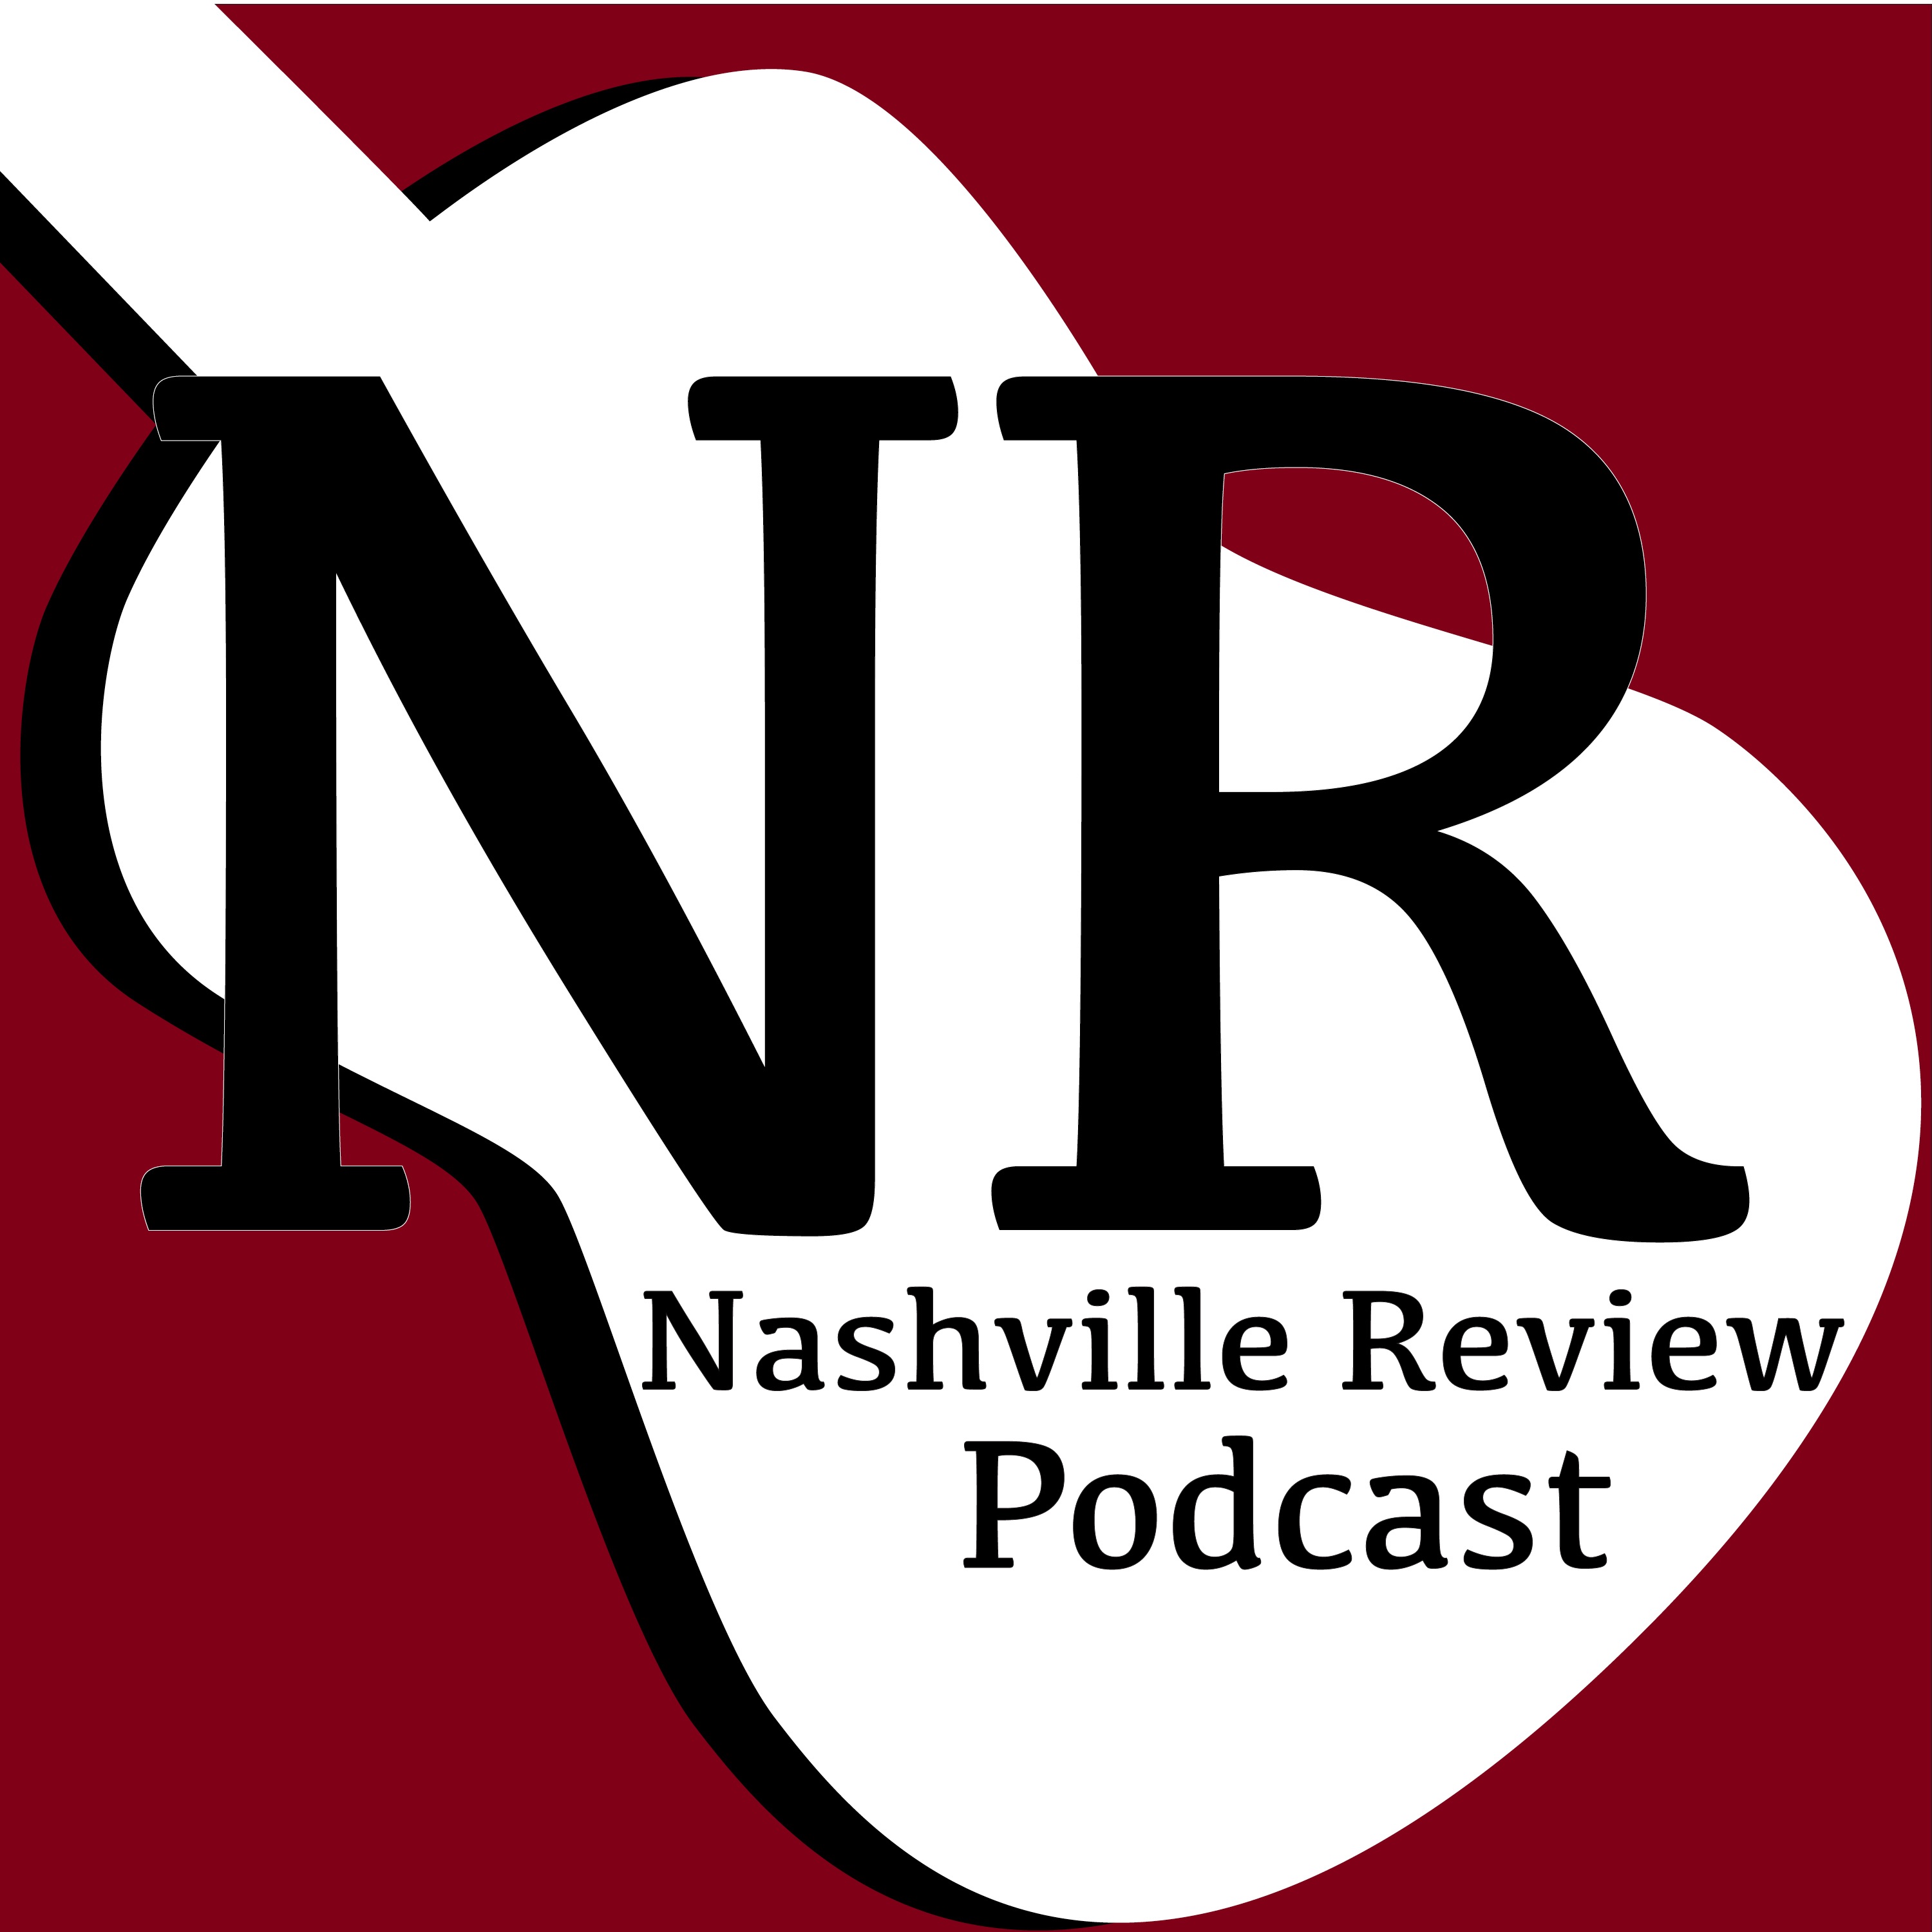 NashvilleReviewPodcast